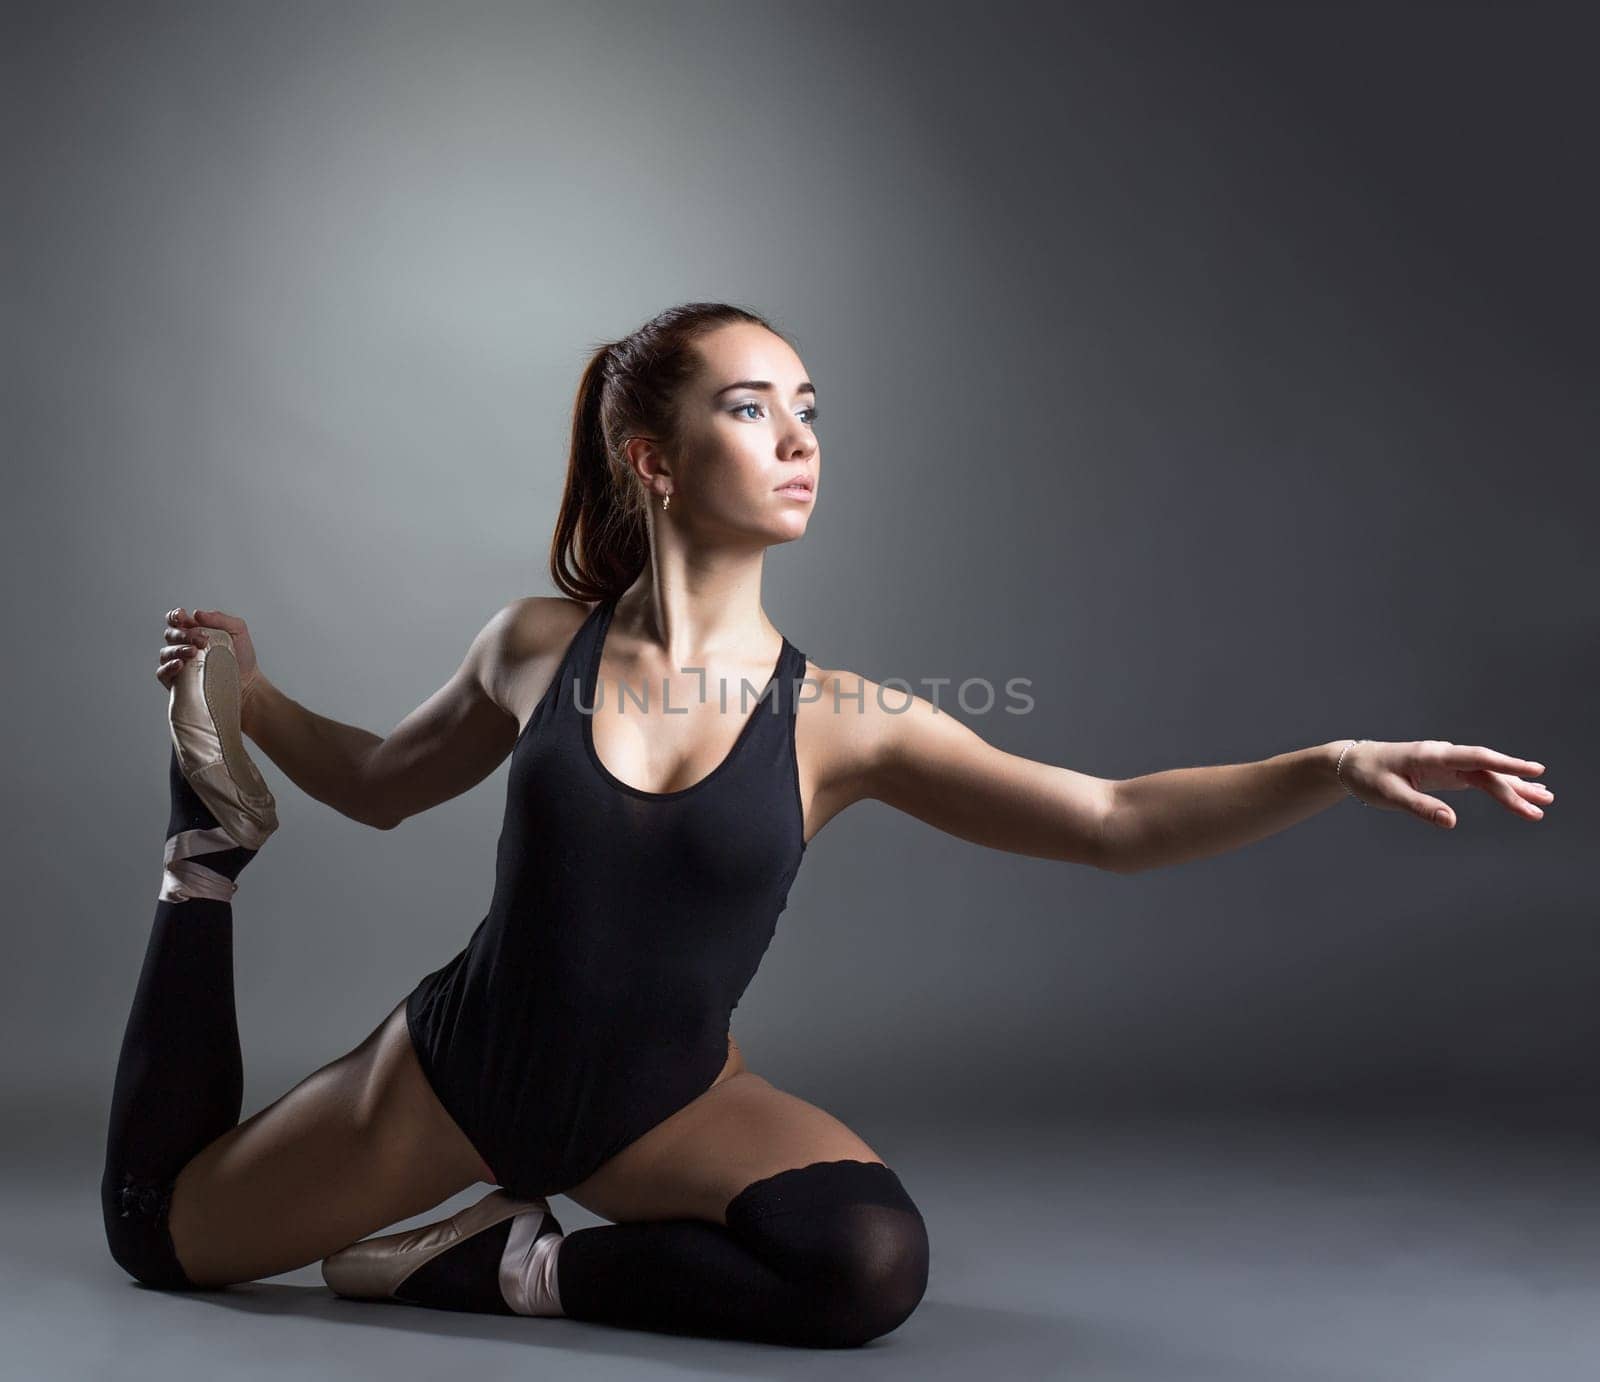 Image of inspired ballerina posing in studio, on gray background